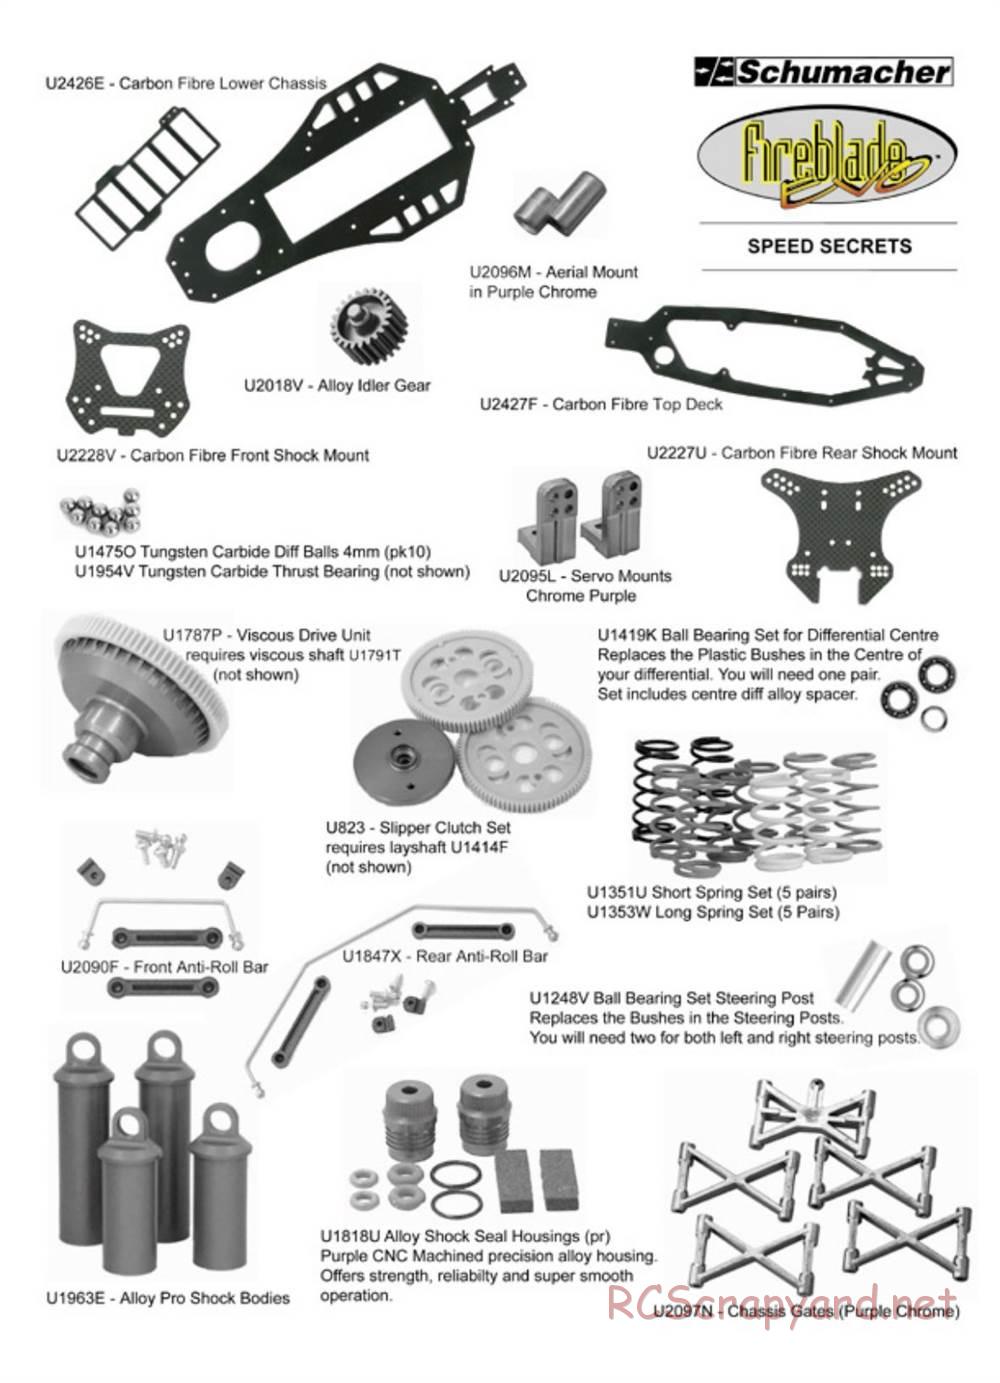 Schumacher - Fireblade Evo - Manual - Page 22